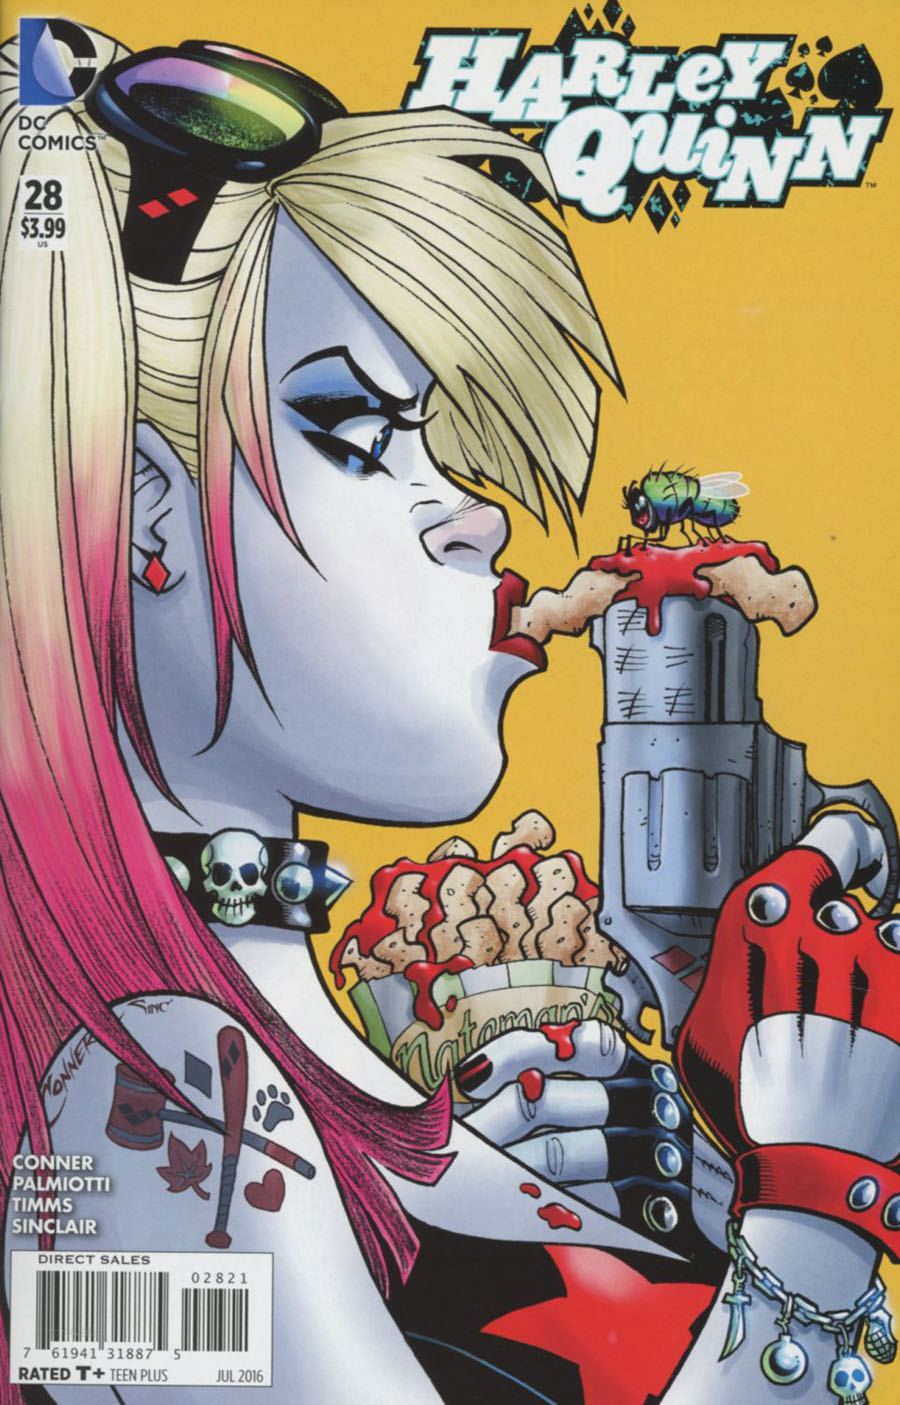 Harley Quinn, Volume 2 by Amanda Conner